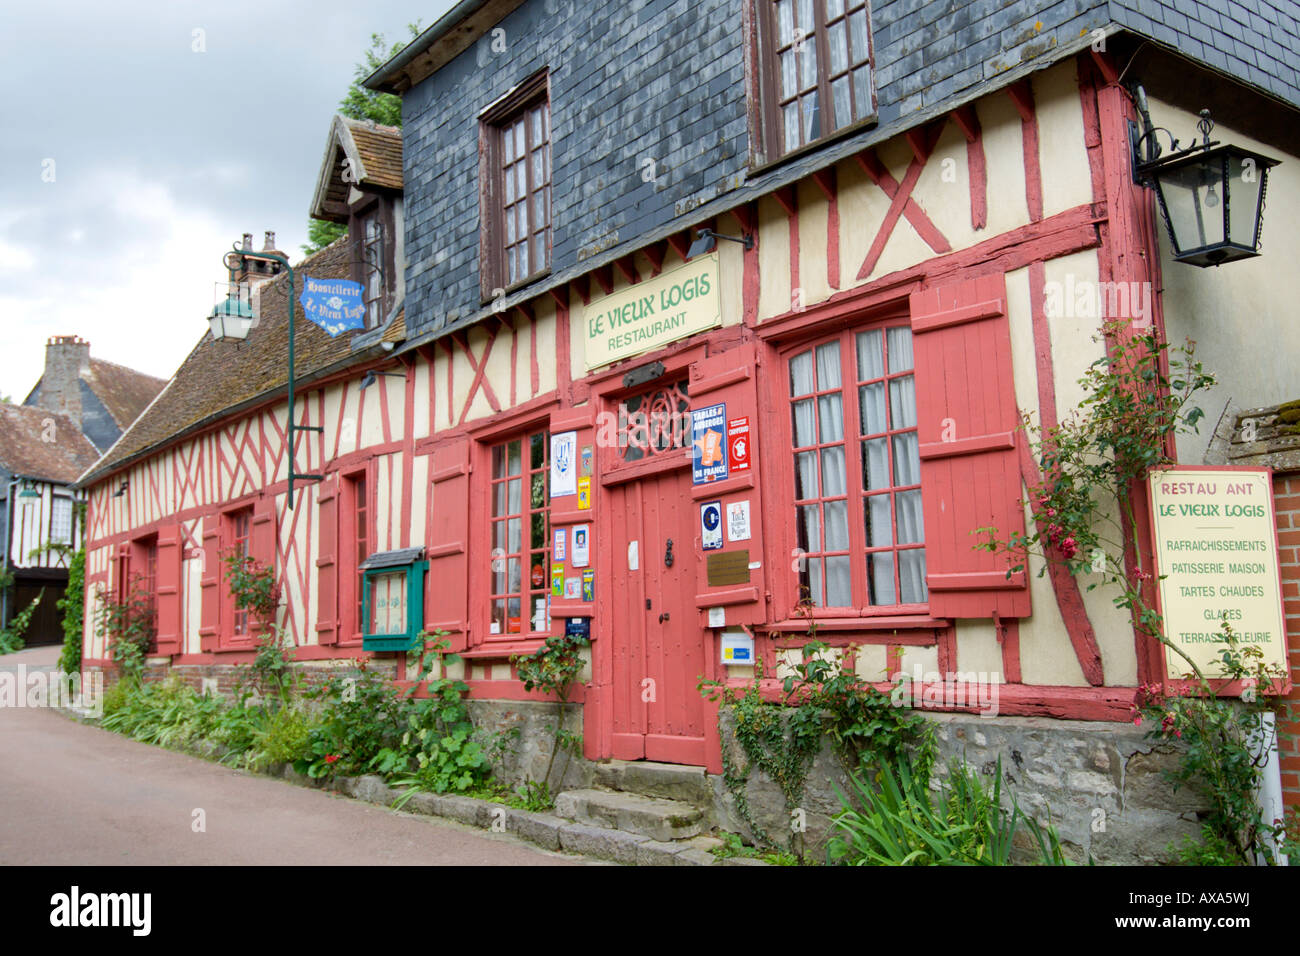 LeVieux Logis Restaurant, Gerberoy Village, France Stock Photo